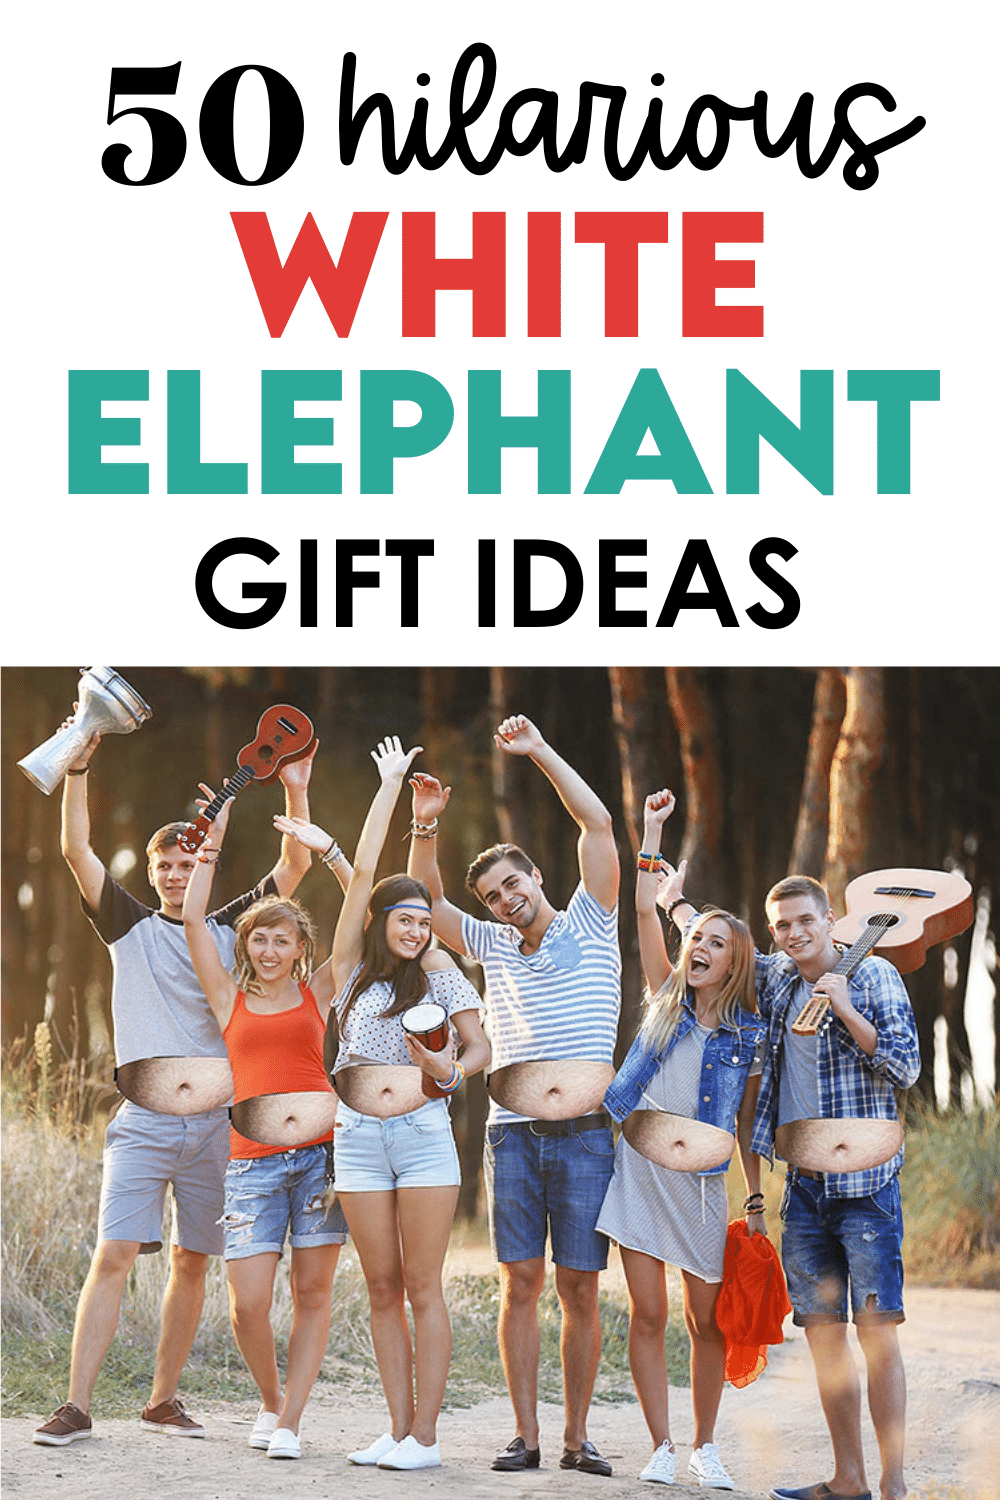 DIY White Elephant Christmas Gift Ideas Under Five Dollars Teacher